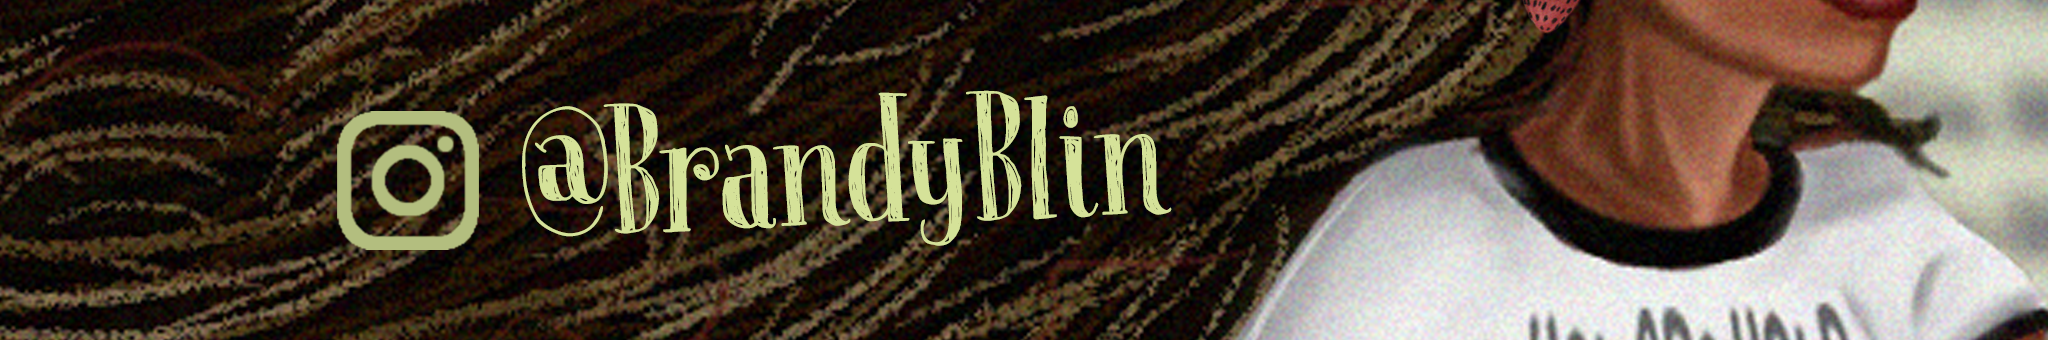 Brandy Williams's profile banner